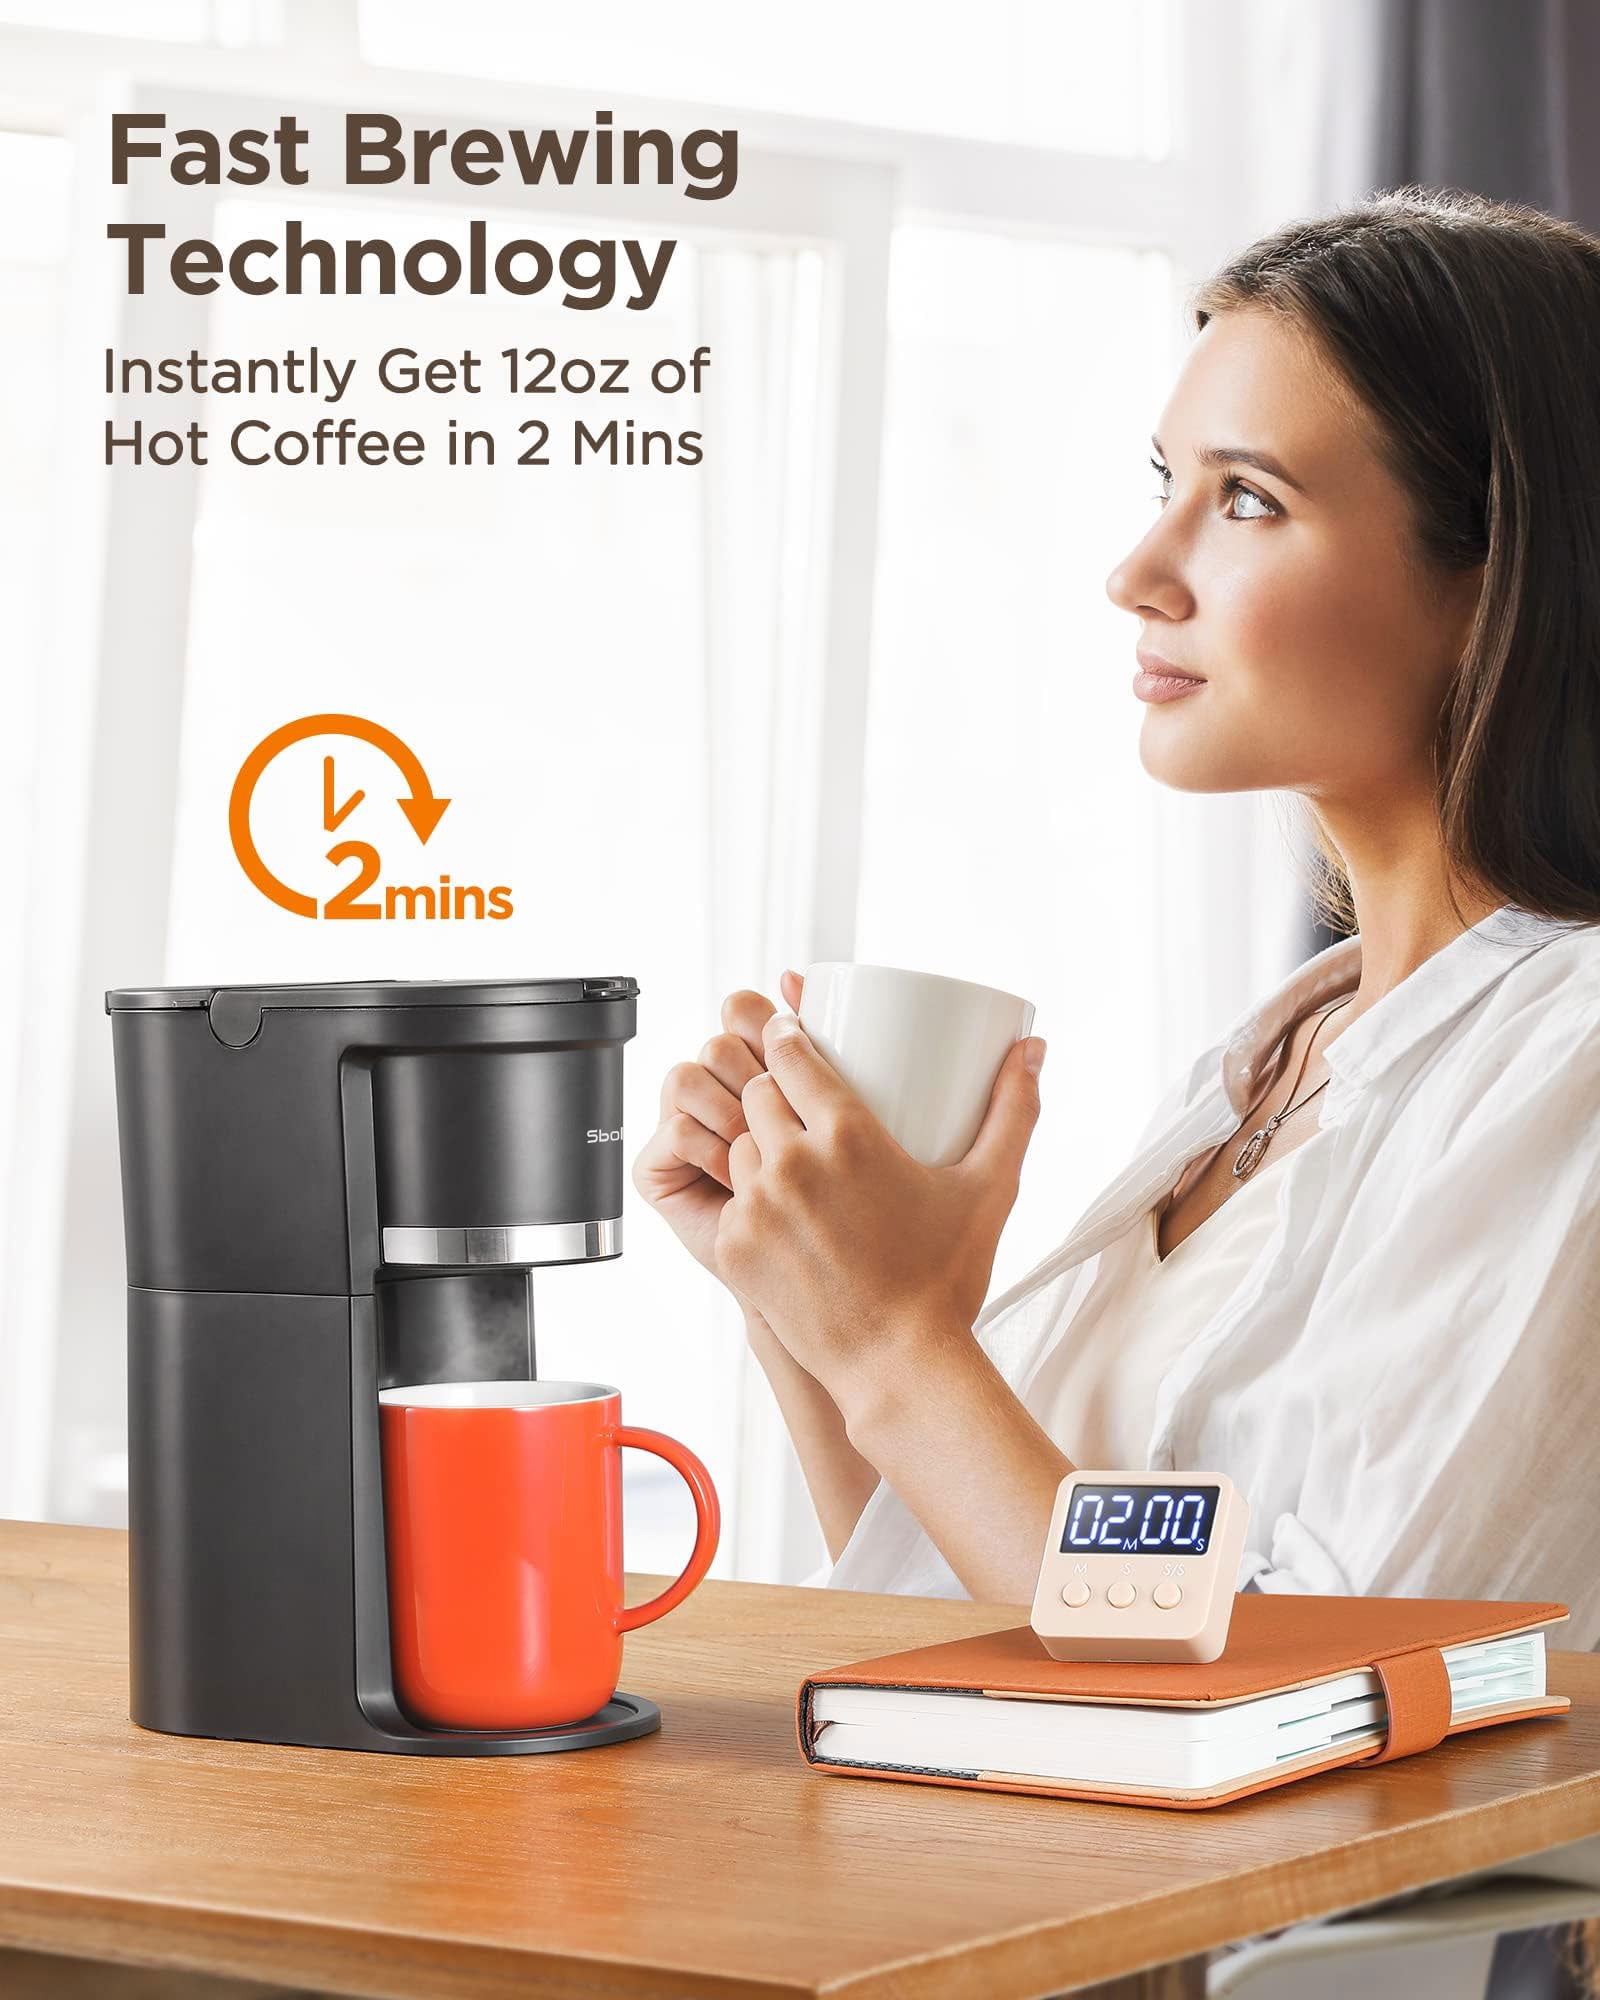 Single Serve K-Cup Coffee Maker Machine Drip Tray 14oz Water Tank 3 Min Sboly